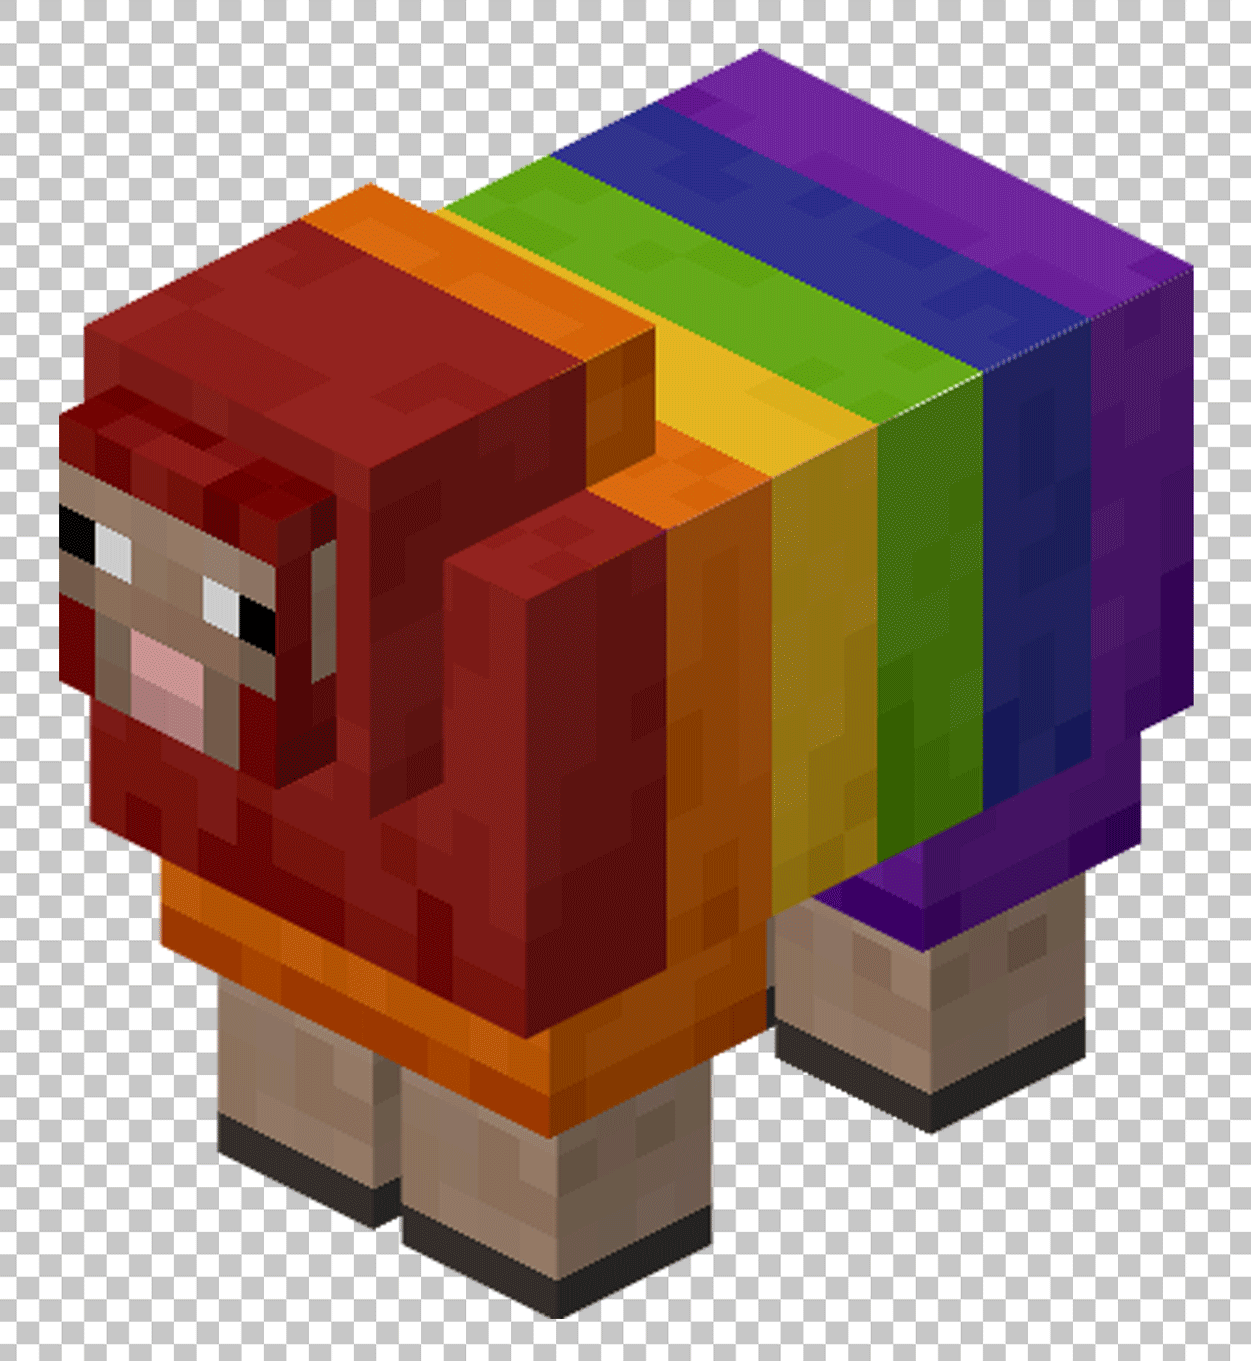 Minecraft Earth Rainbow Sheep PNG Image